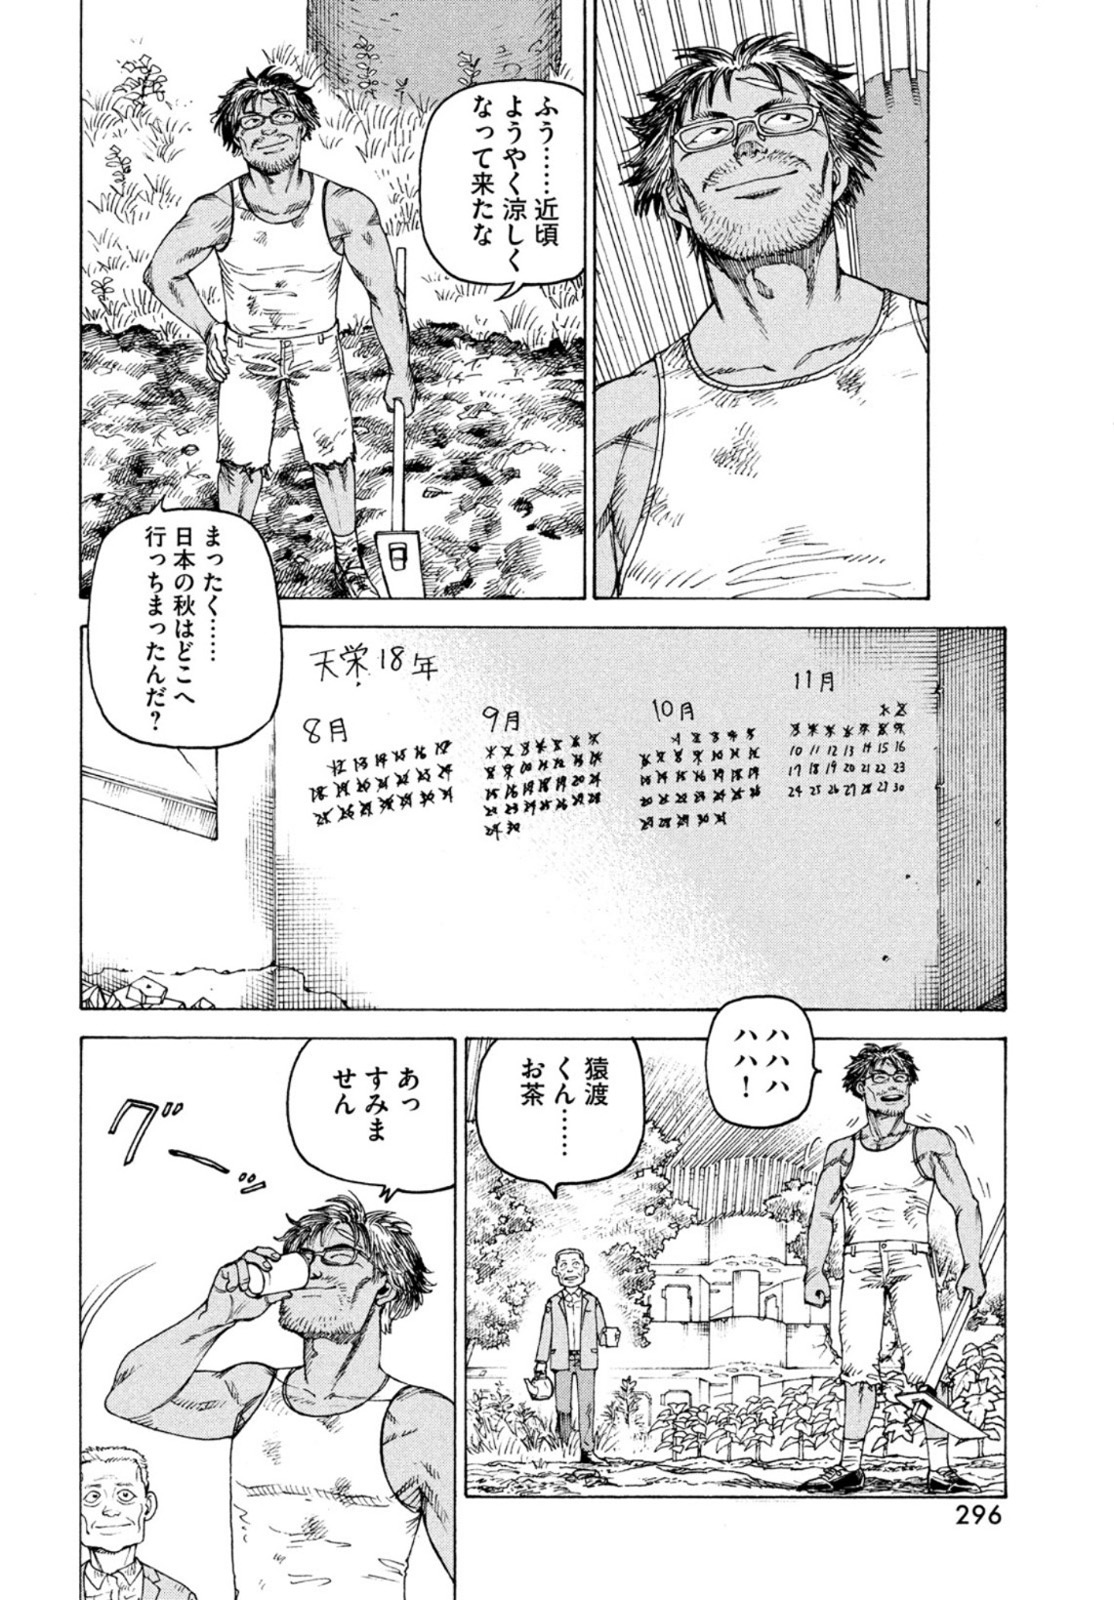 Tengoku Daimakyou 46, Tengoku Daimakyou 46 Page 3 - Read Free